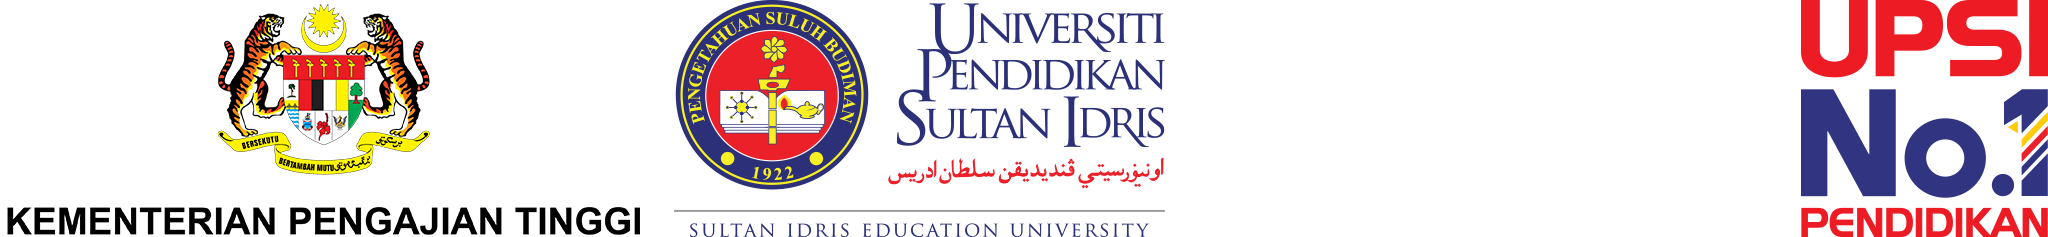 UPSI | Pusat Pembangunan Akademik